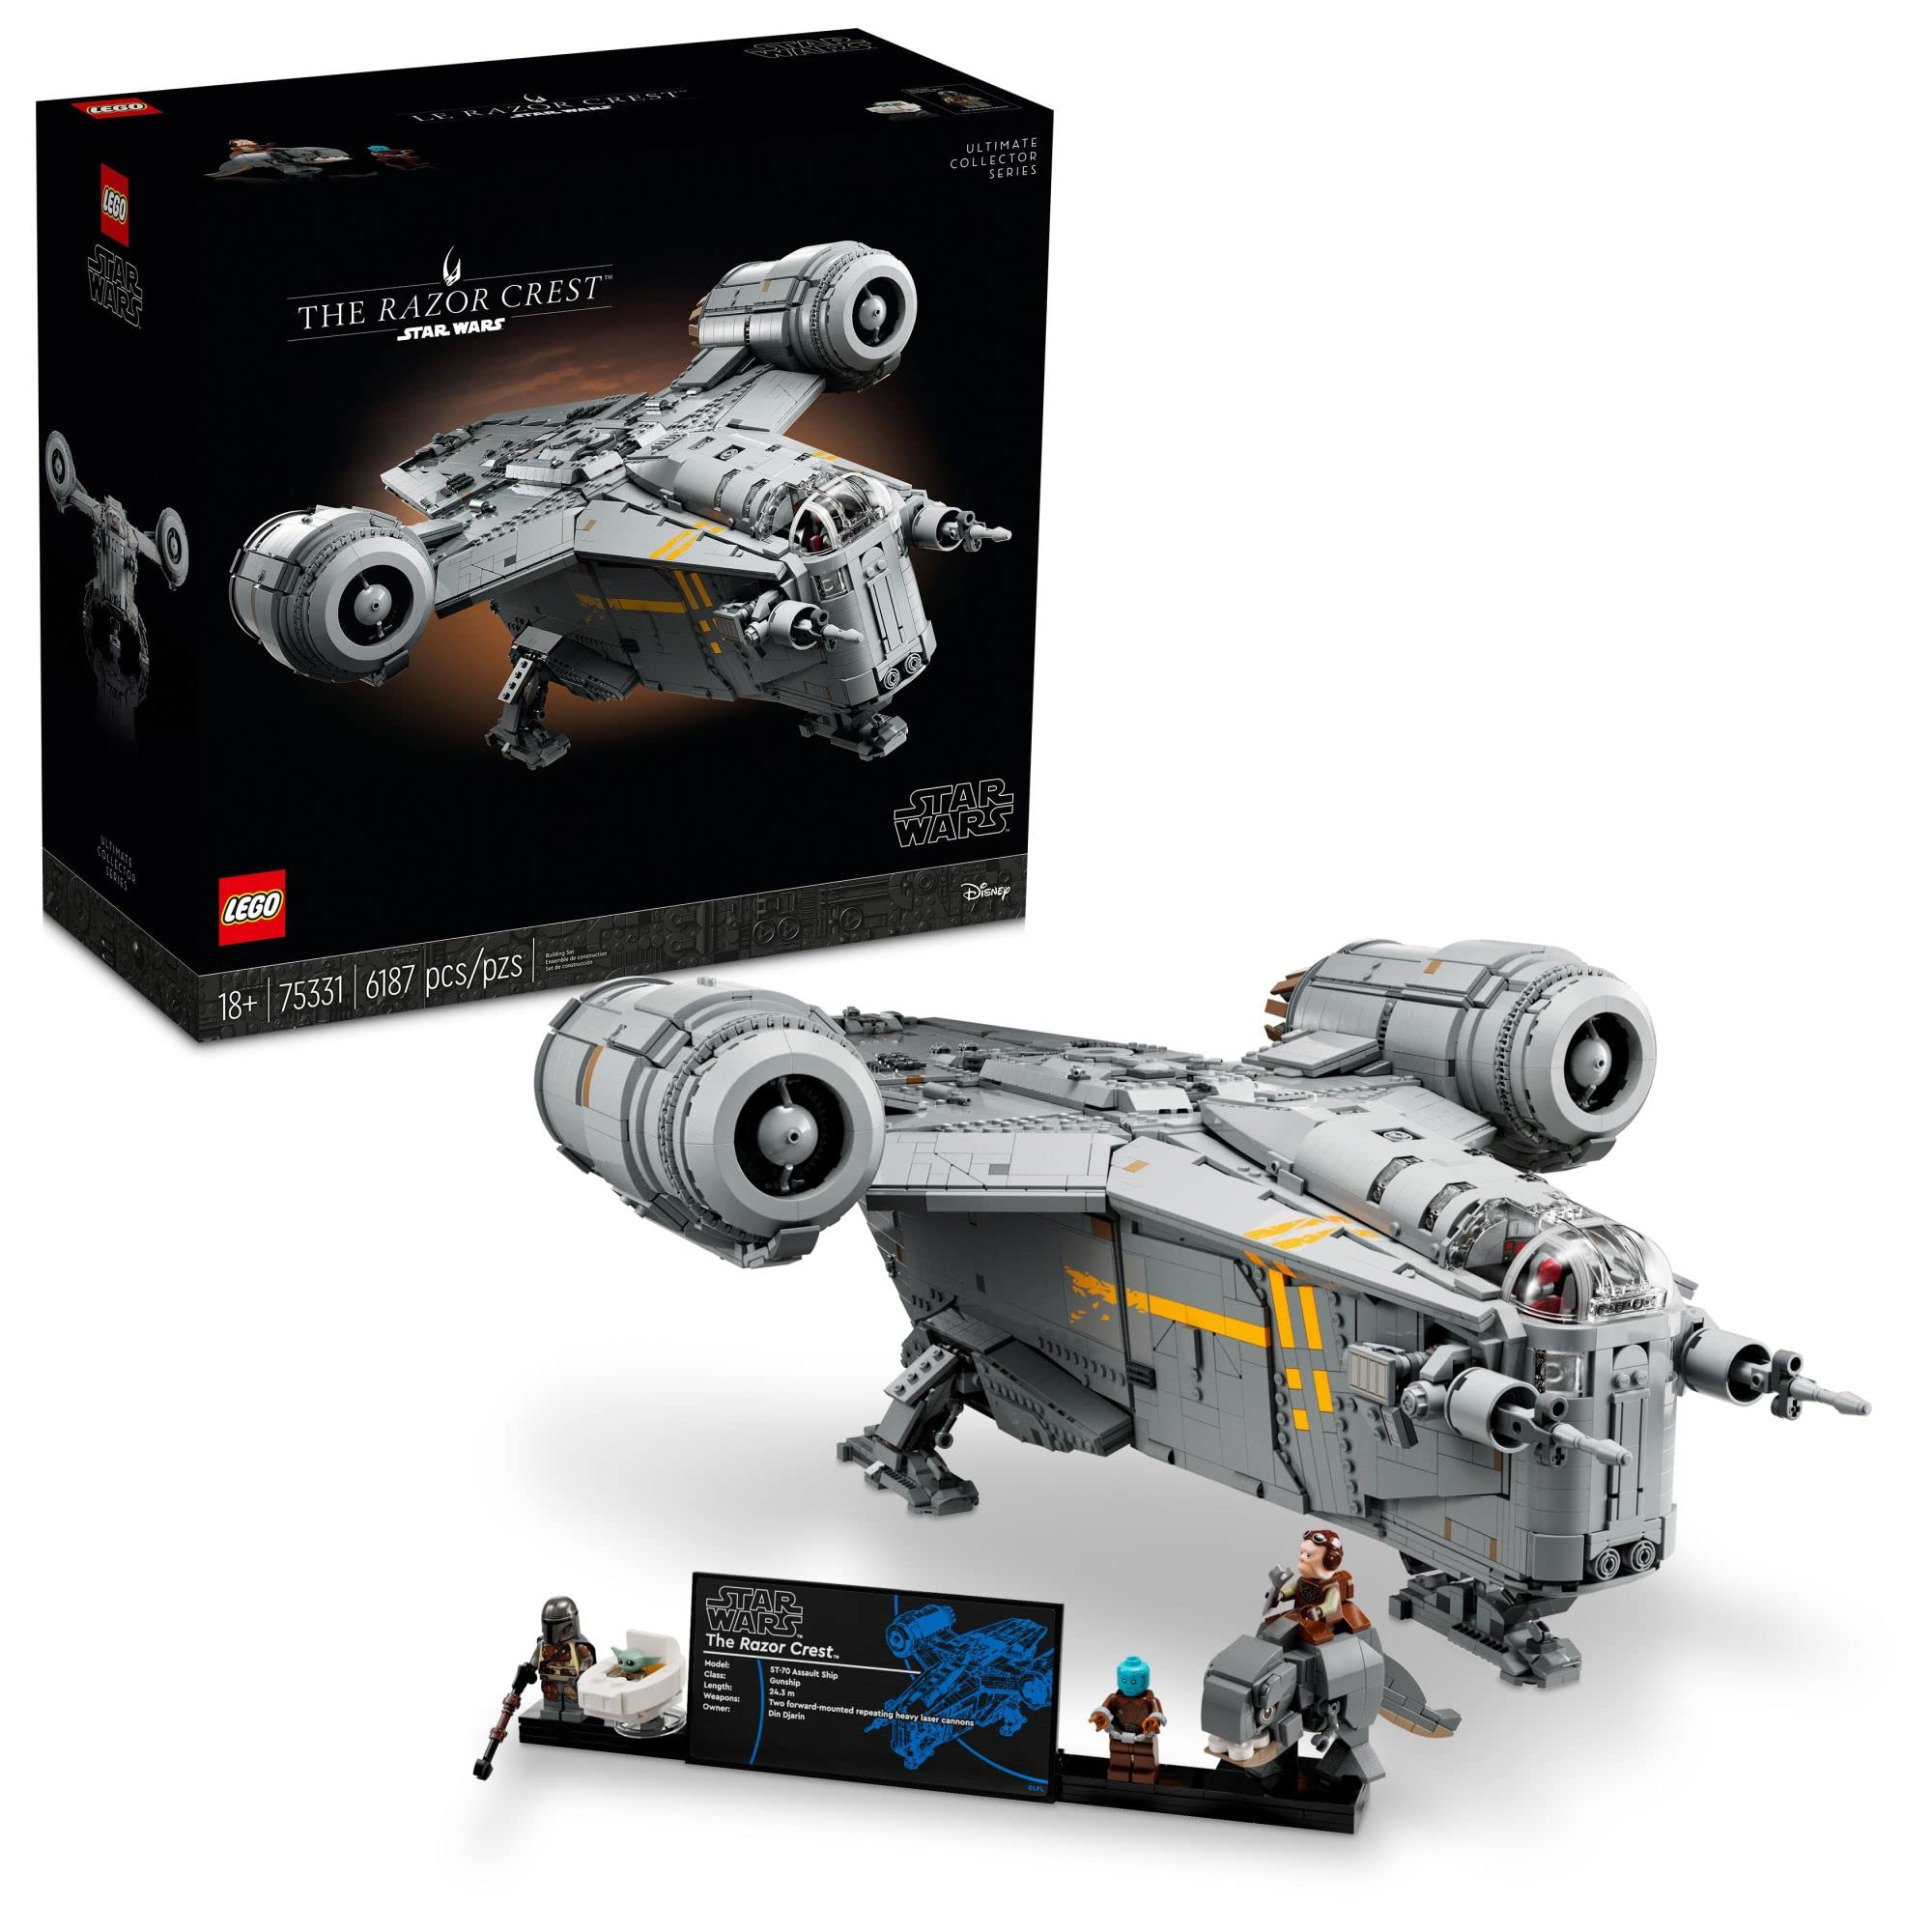 $479.99: LEGO Star Wars The Razor Crest 75331 UCS Set